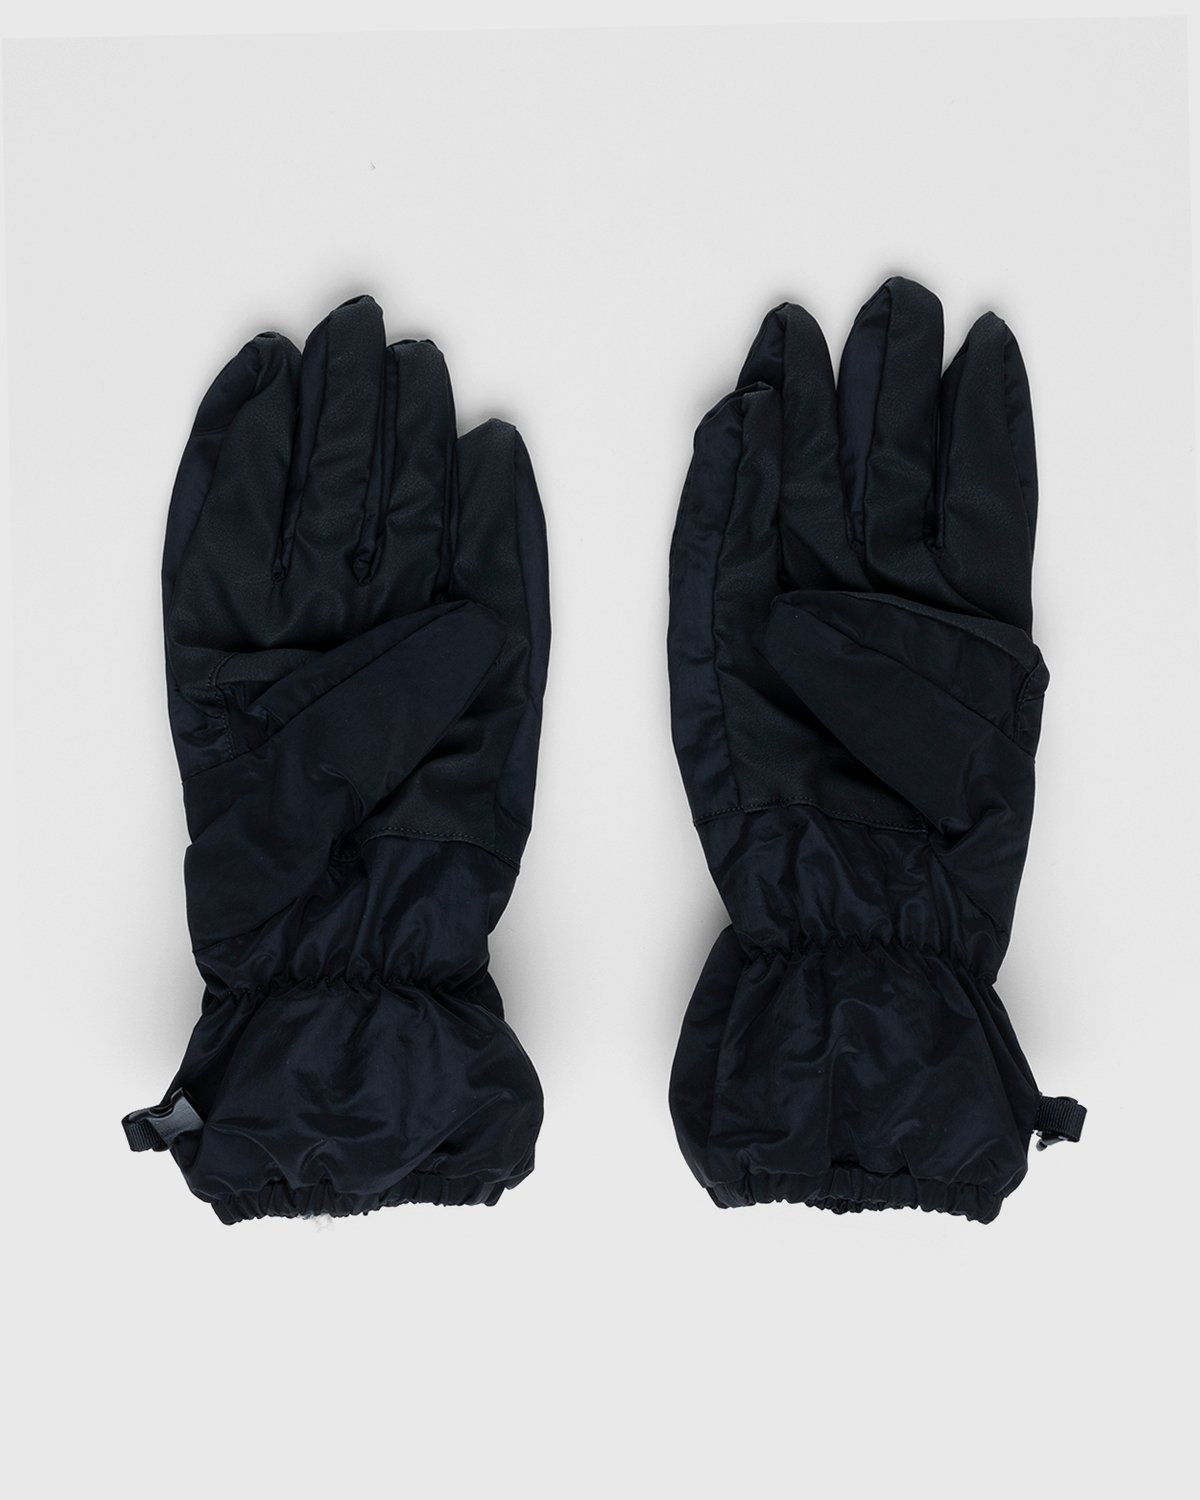 Stone Island - Gloves Black - Accessories - Black - Image 2